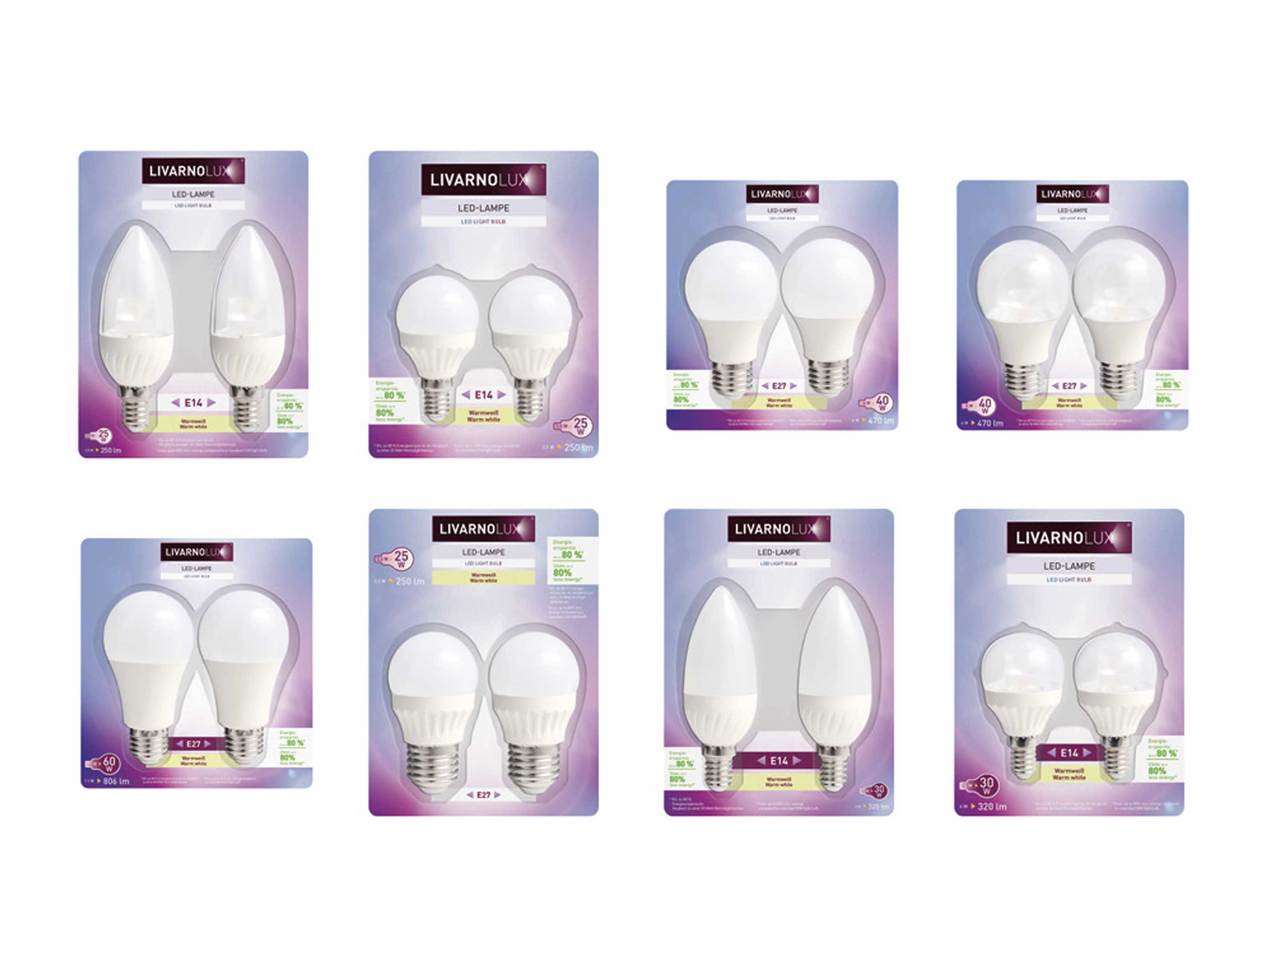 LIVARNO LUX LED Light Bulbs